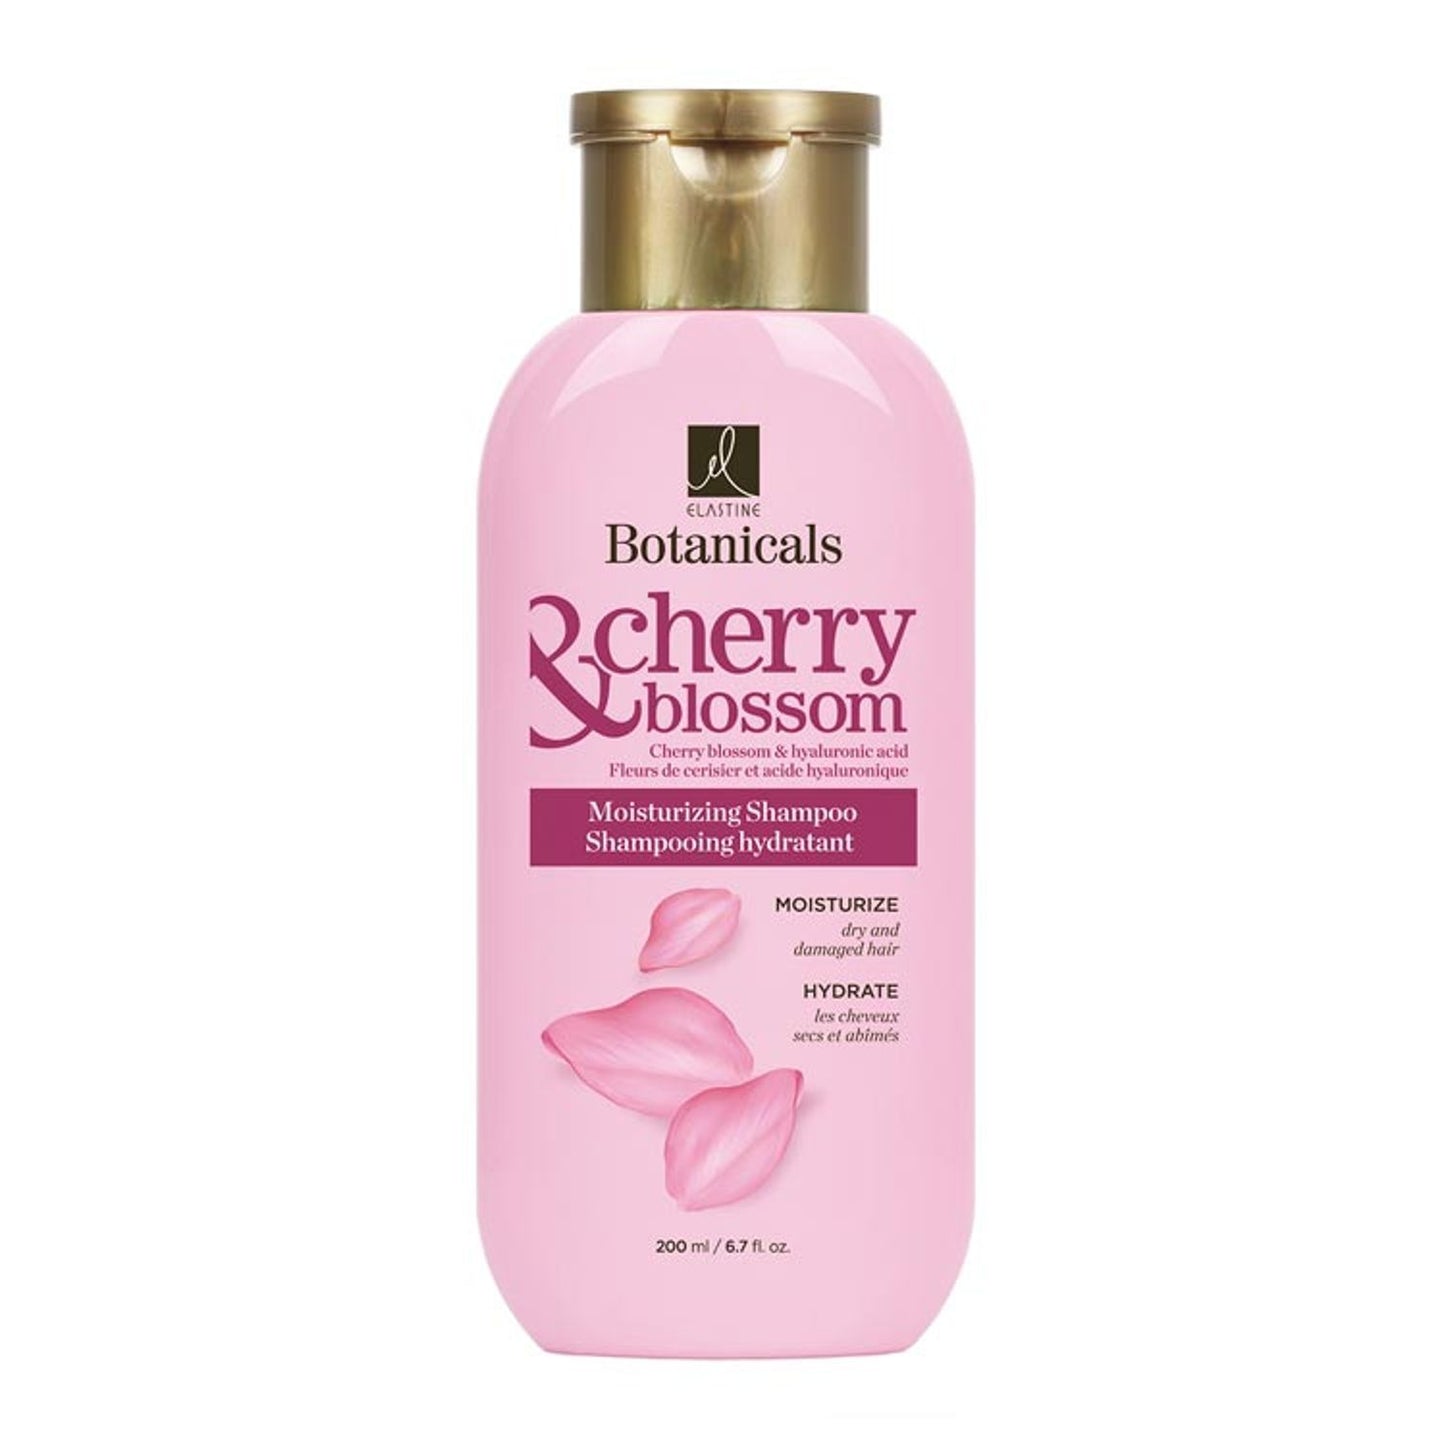 Elastine Botanicals Cherry Blossom Shampoo & Conditioner